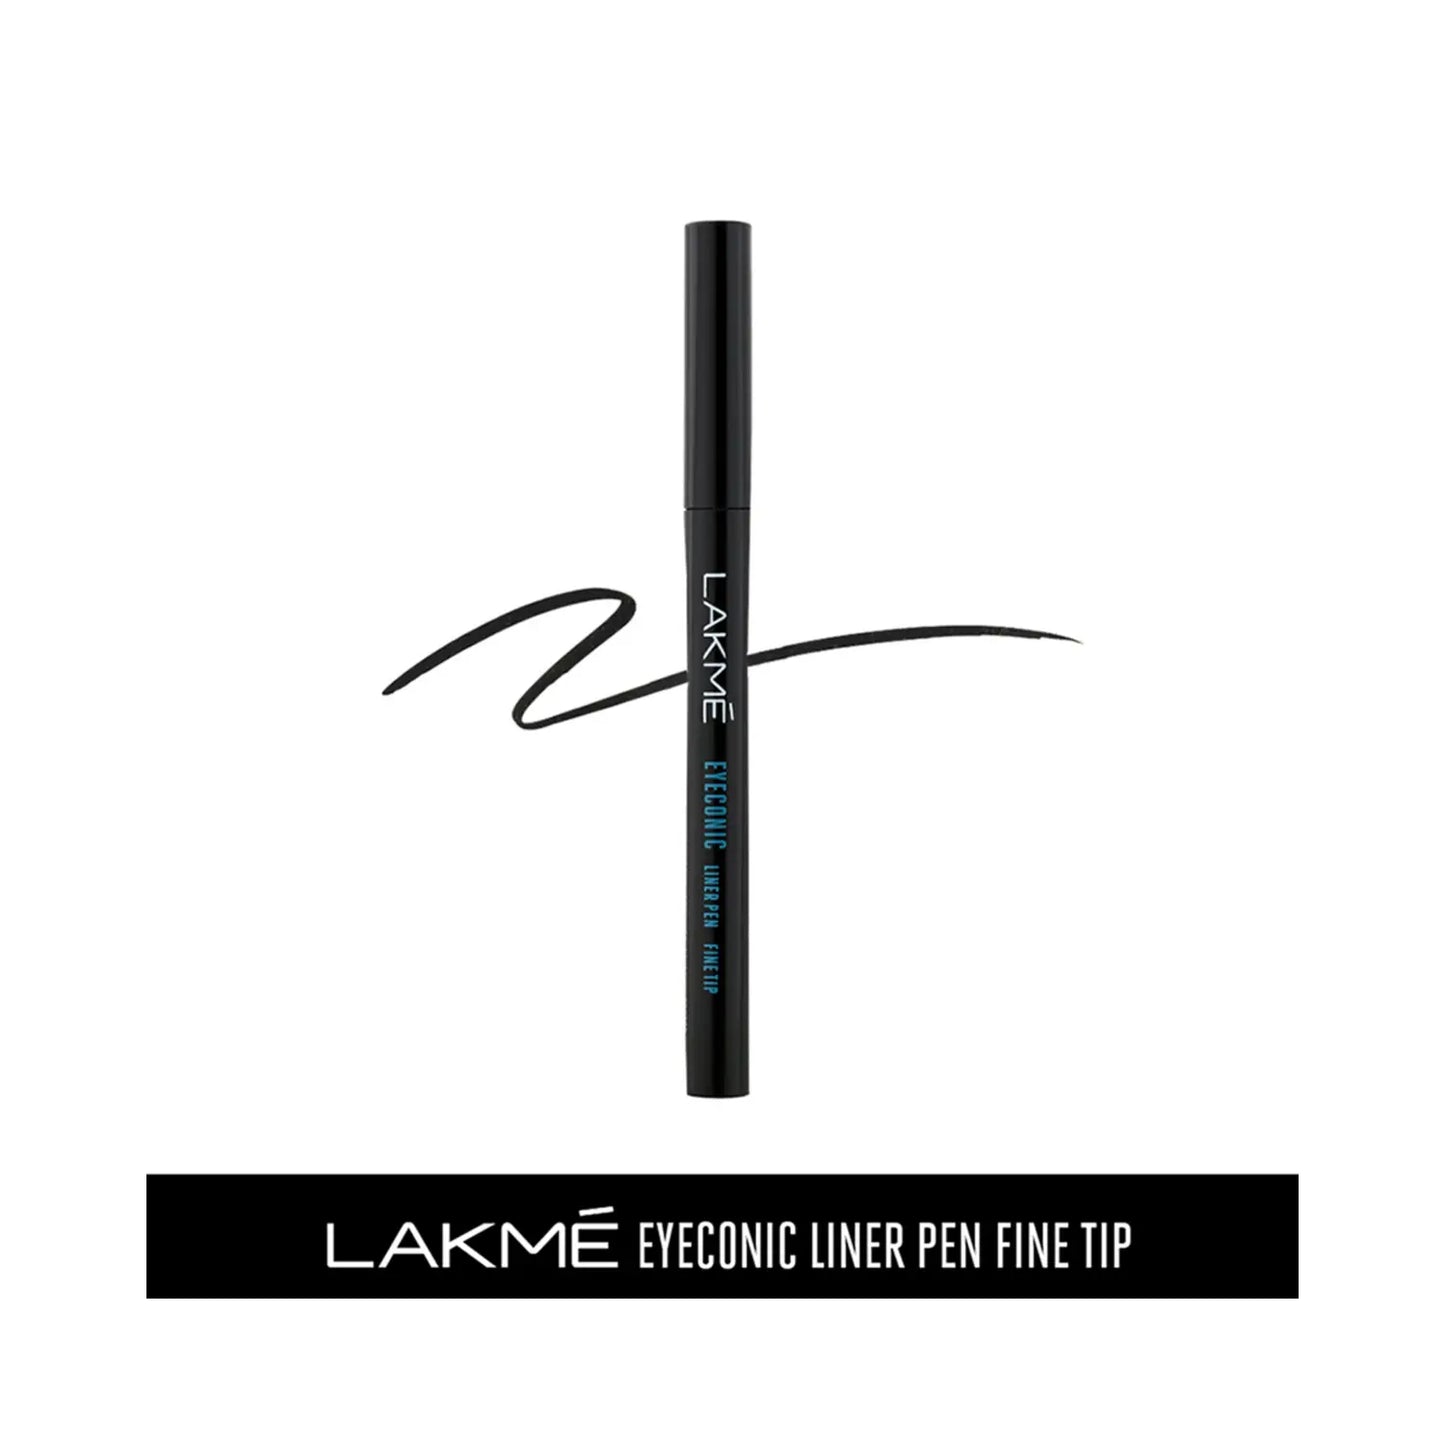 Lakme Eyeconic Liner Pen Fine Tip - Deep Black (1ml)